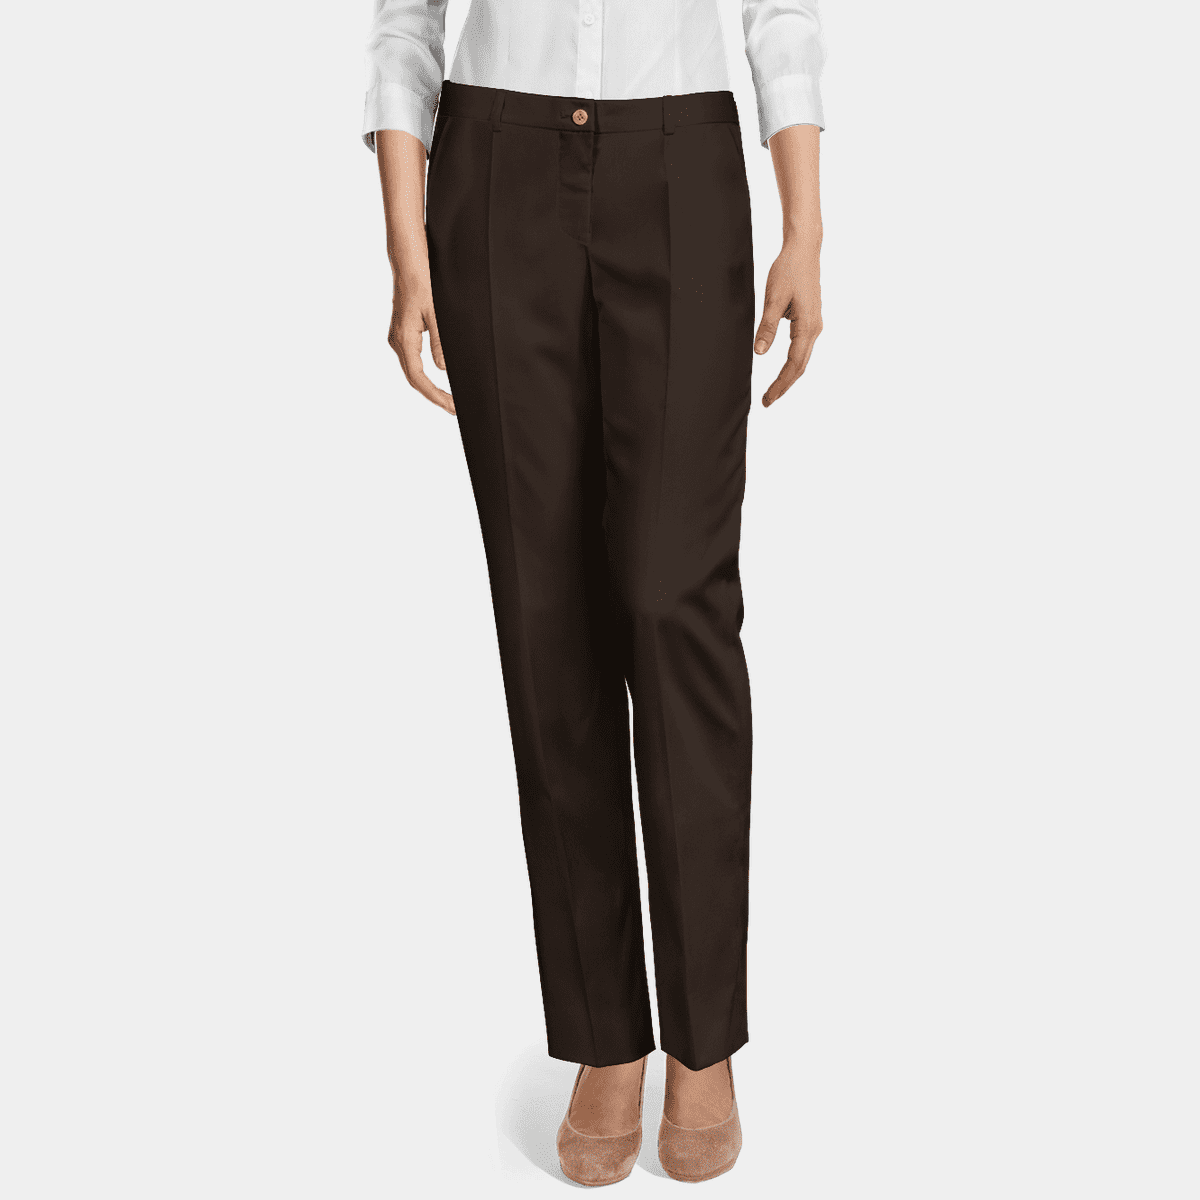 Chocolate brown flat-front regular fit Women Dress Pants